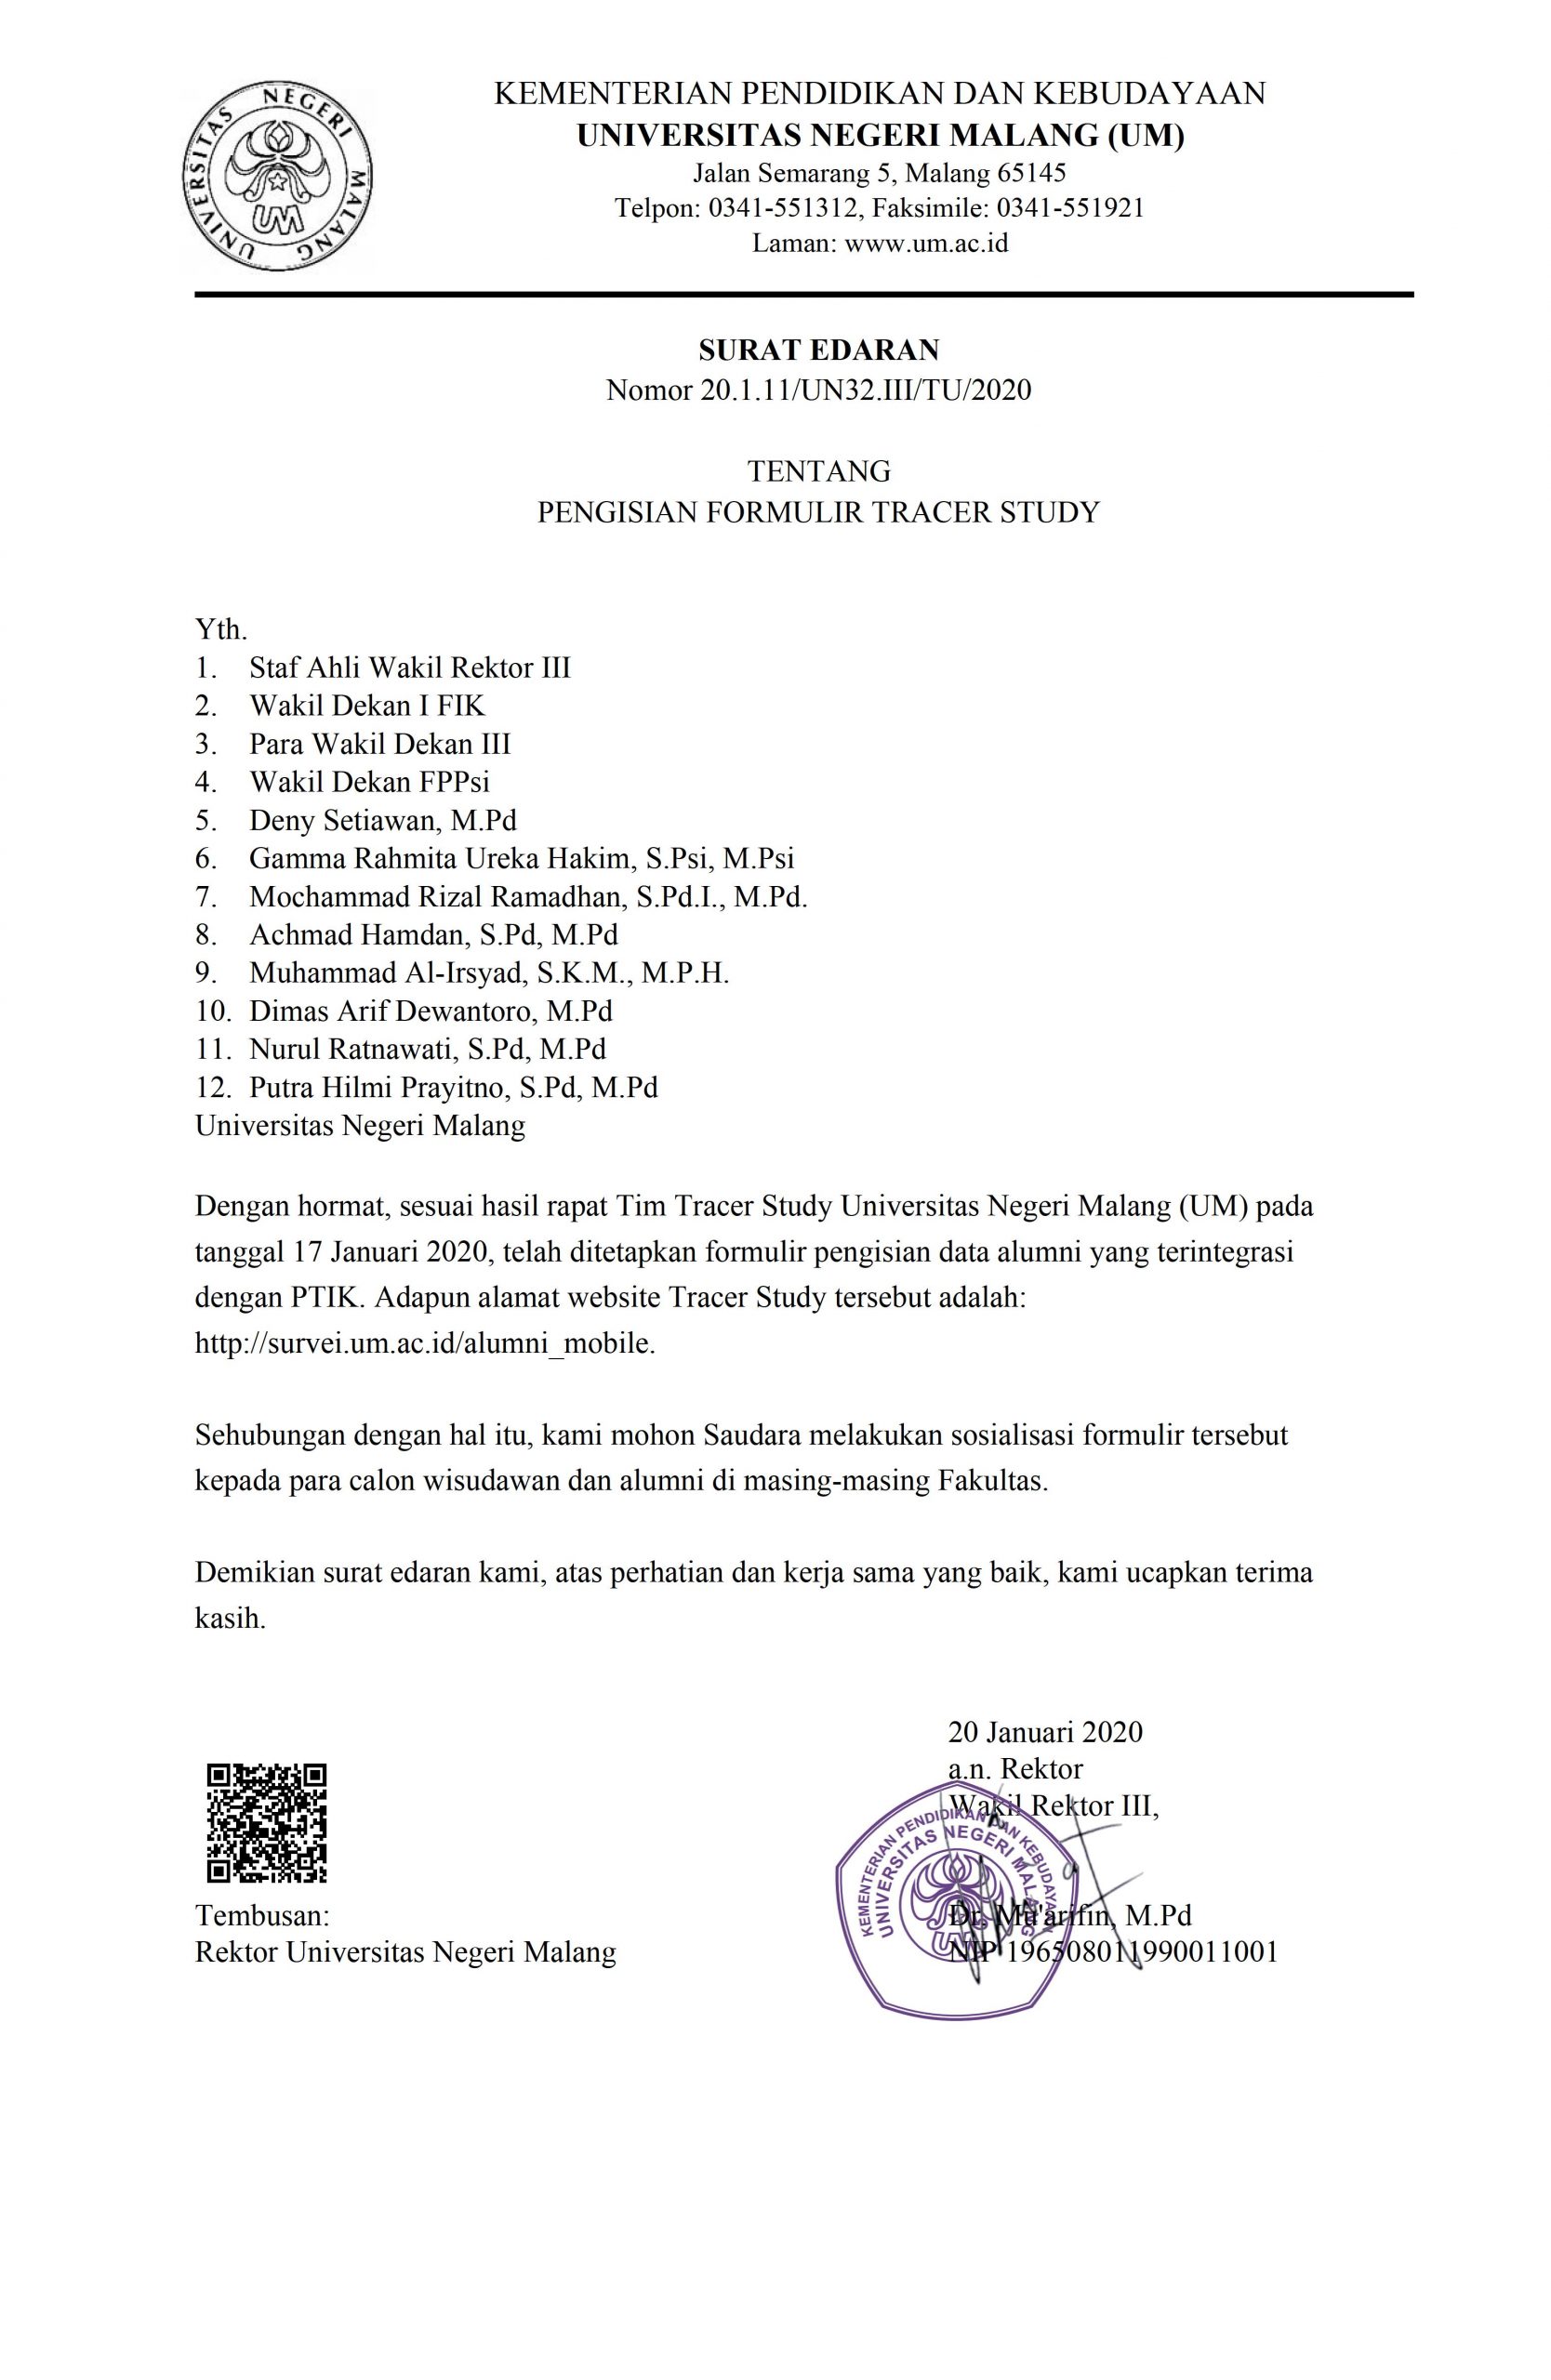 Surat Edaran Tentang Pengisian Formulir TRACER STUDY Universitas Negeri Malang